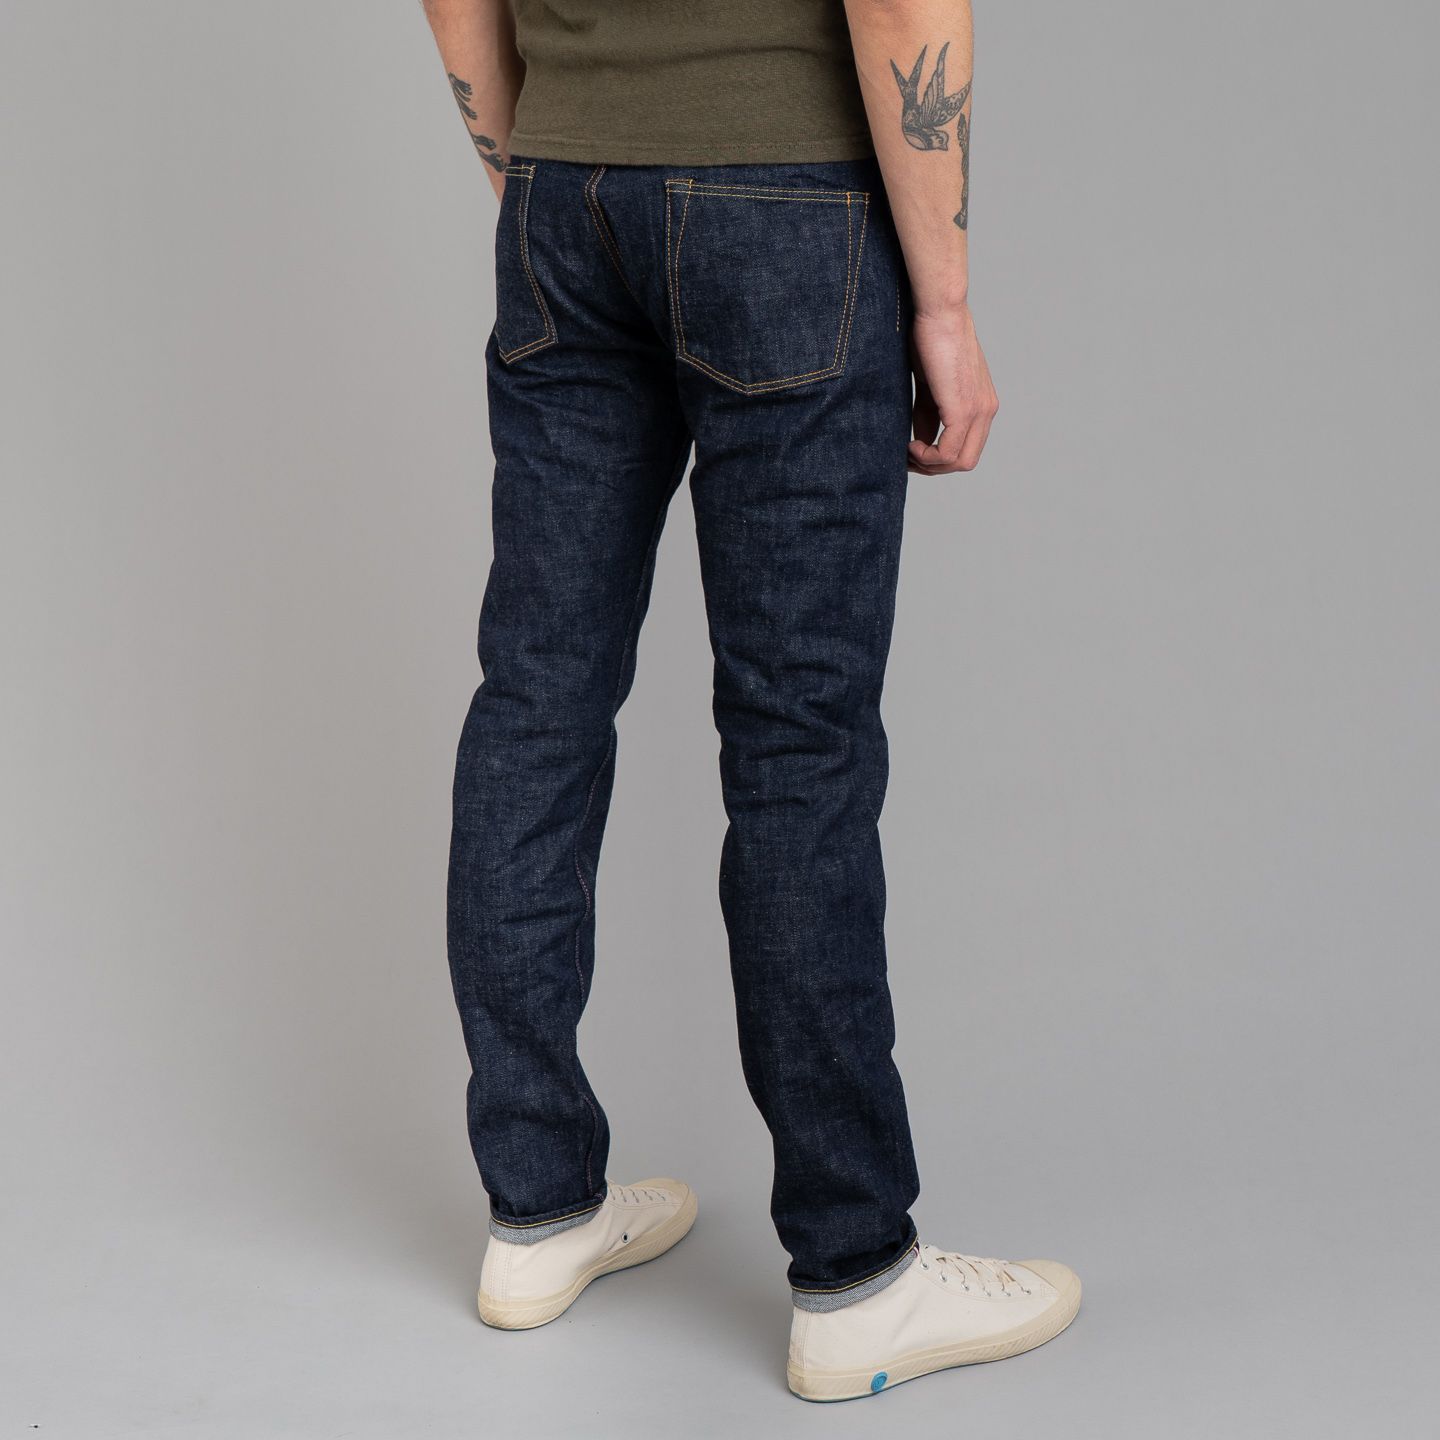 Momotaro 0306-40 14.7oz Legacy Denim Jeans - Tight Tapered